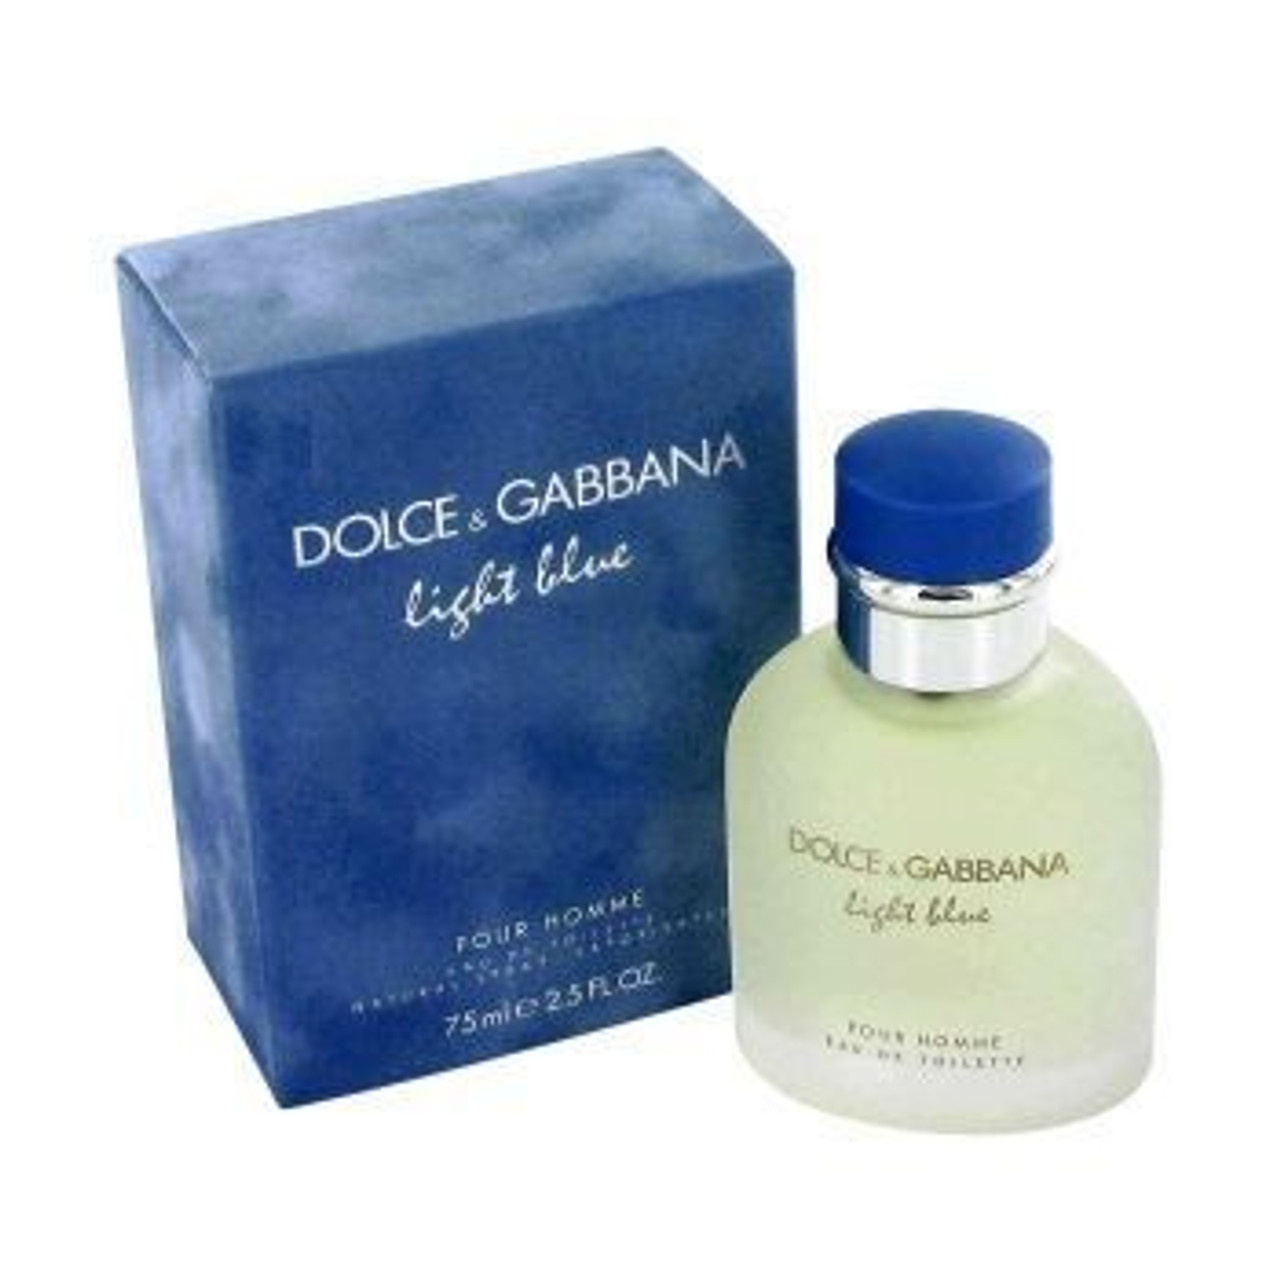 Dolce and Gabbana 6.7oz Cologne Spray Men